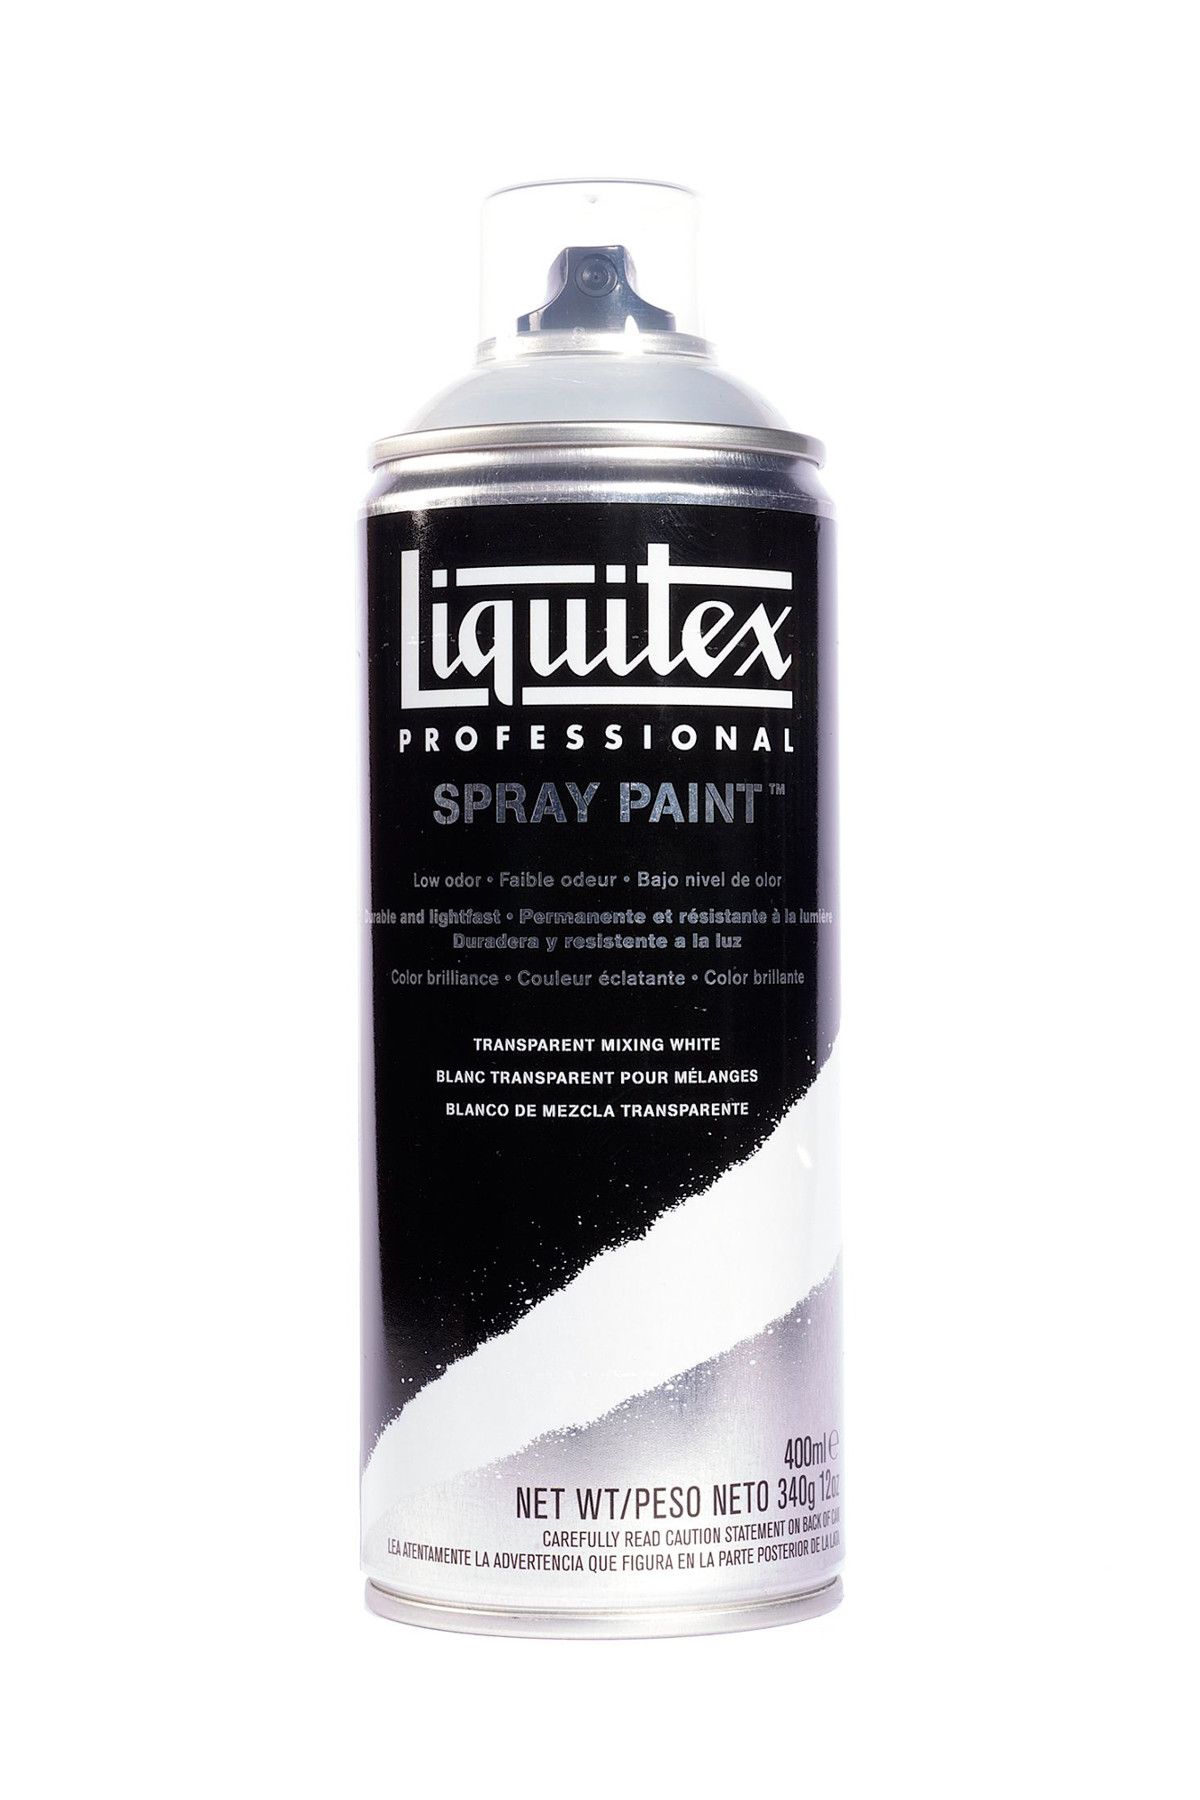 Liquitex Akrilik Sprey Boya 400ml - Transparent Mixing White 213095